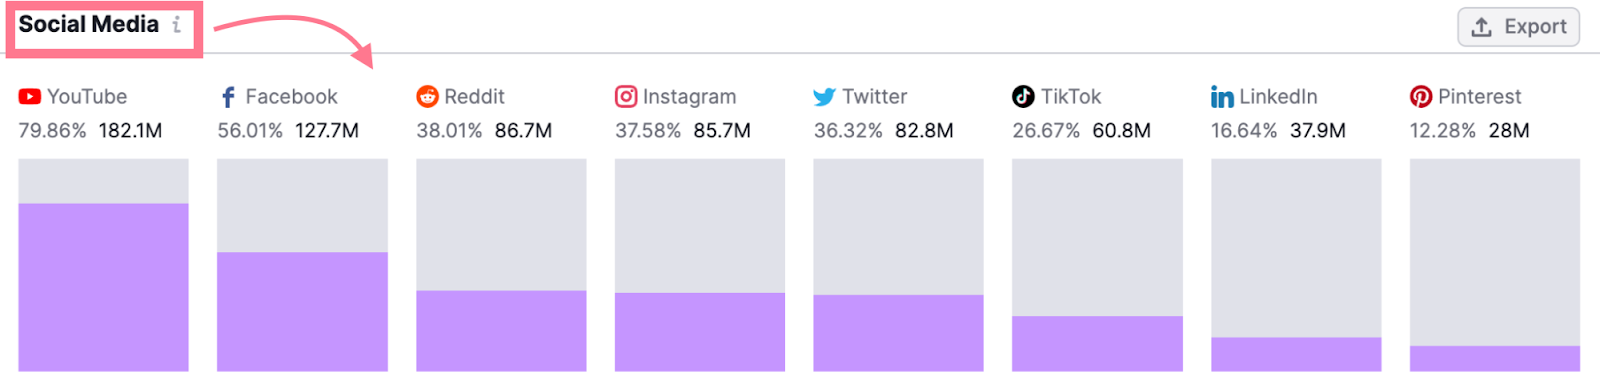 Social media preferences across platforms in One2Target